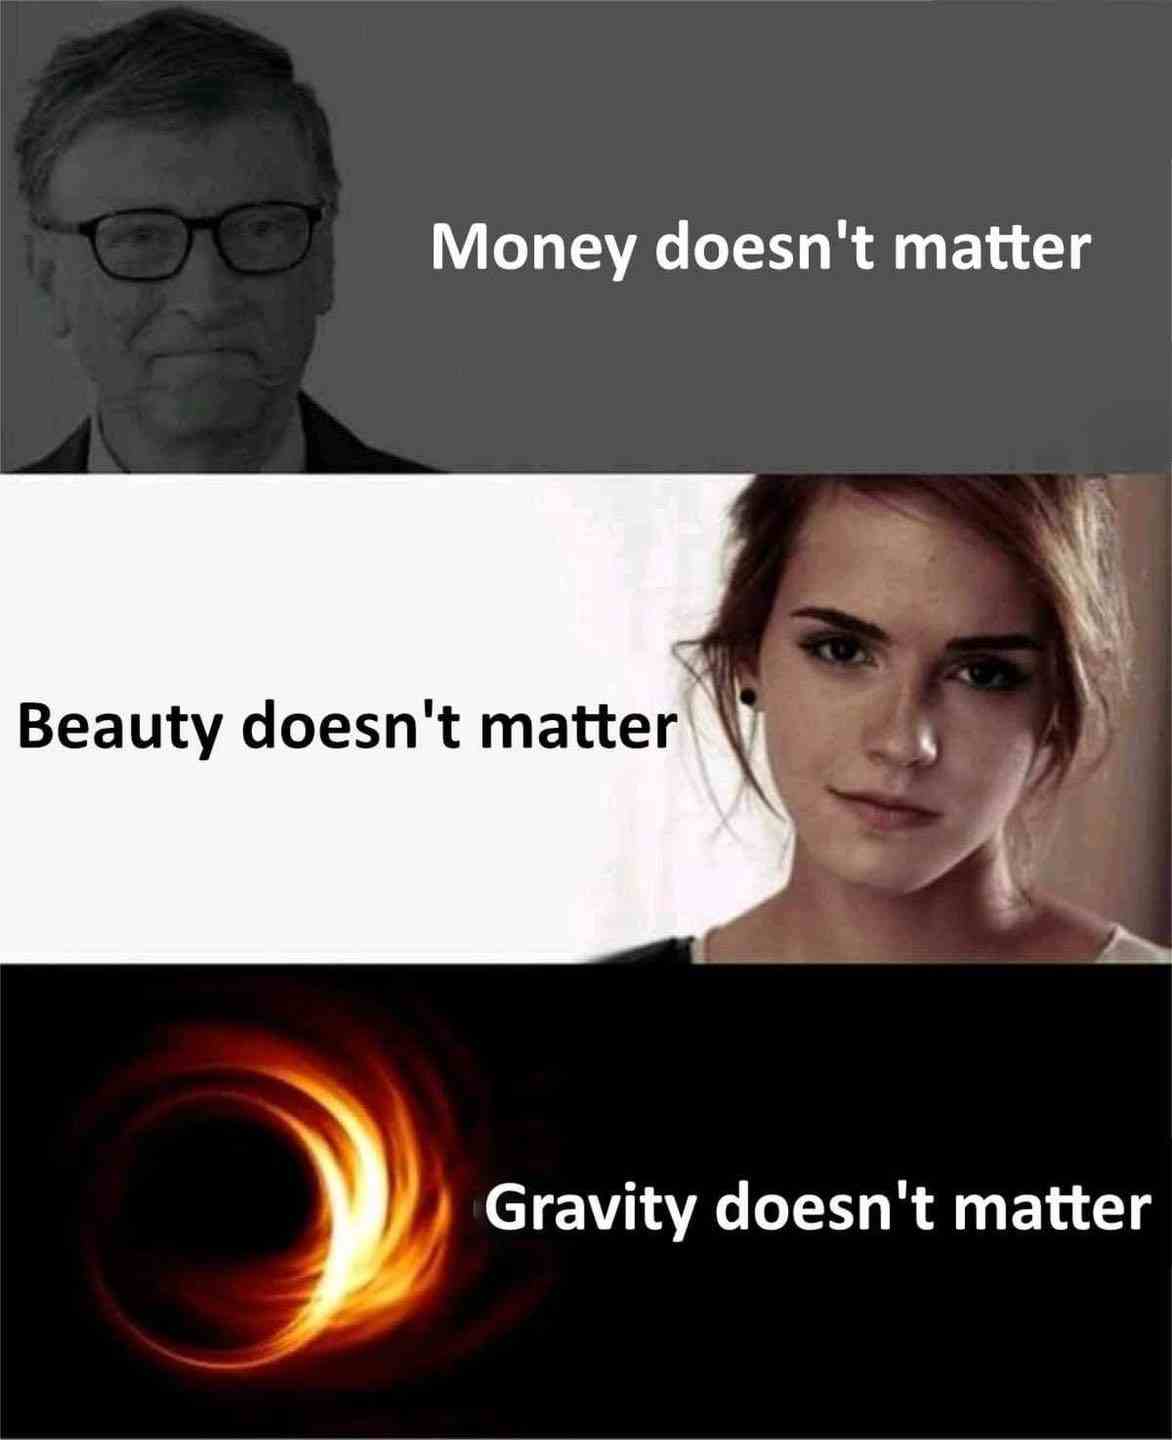 Gravity doesn't matter